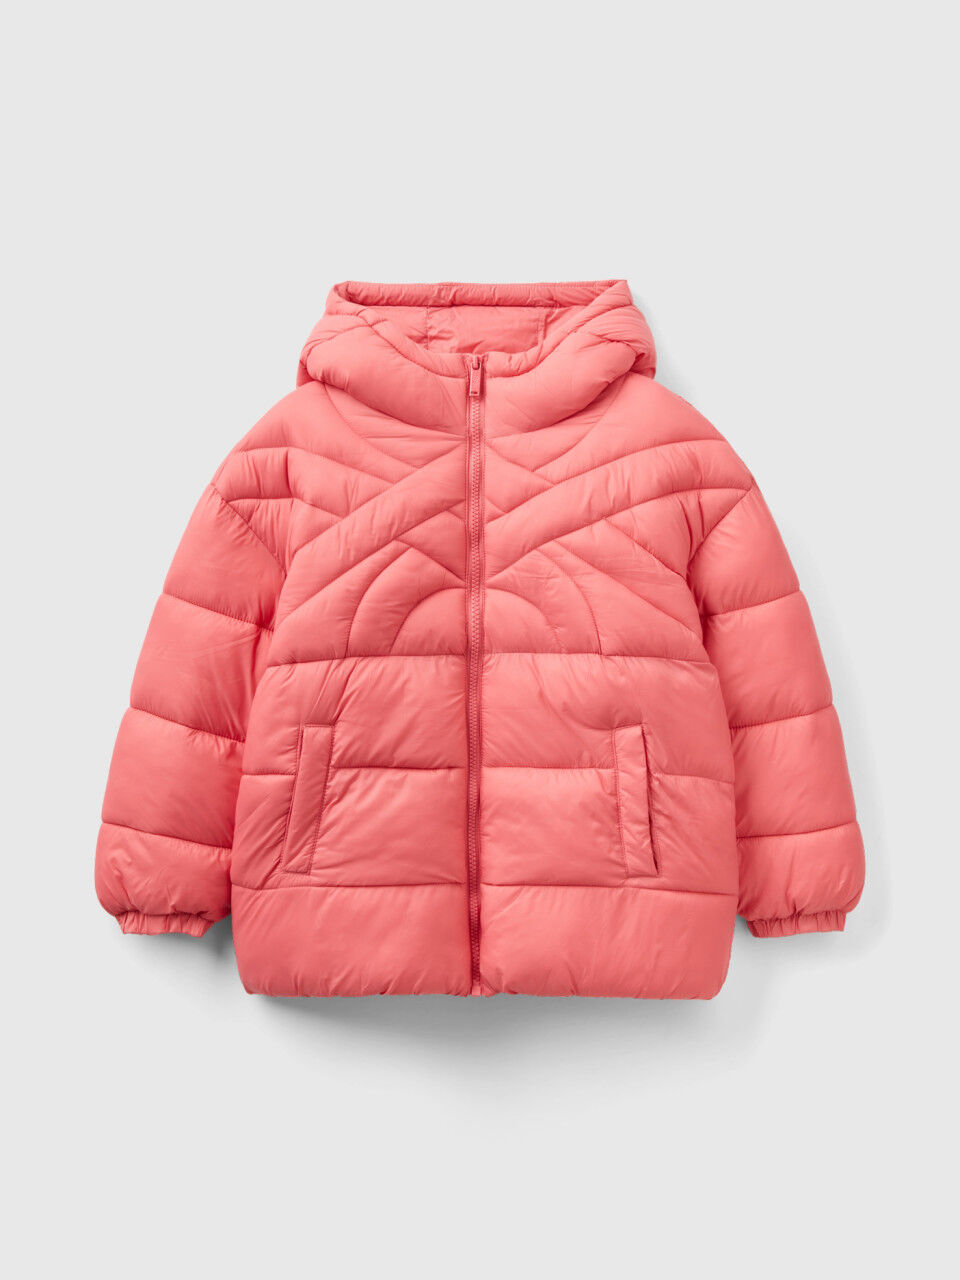 Juicy Couture Short Girls Faux Fur Zip Jacket Size 7 | eBay